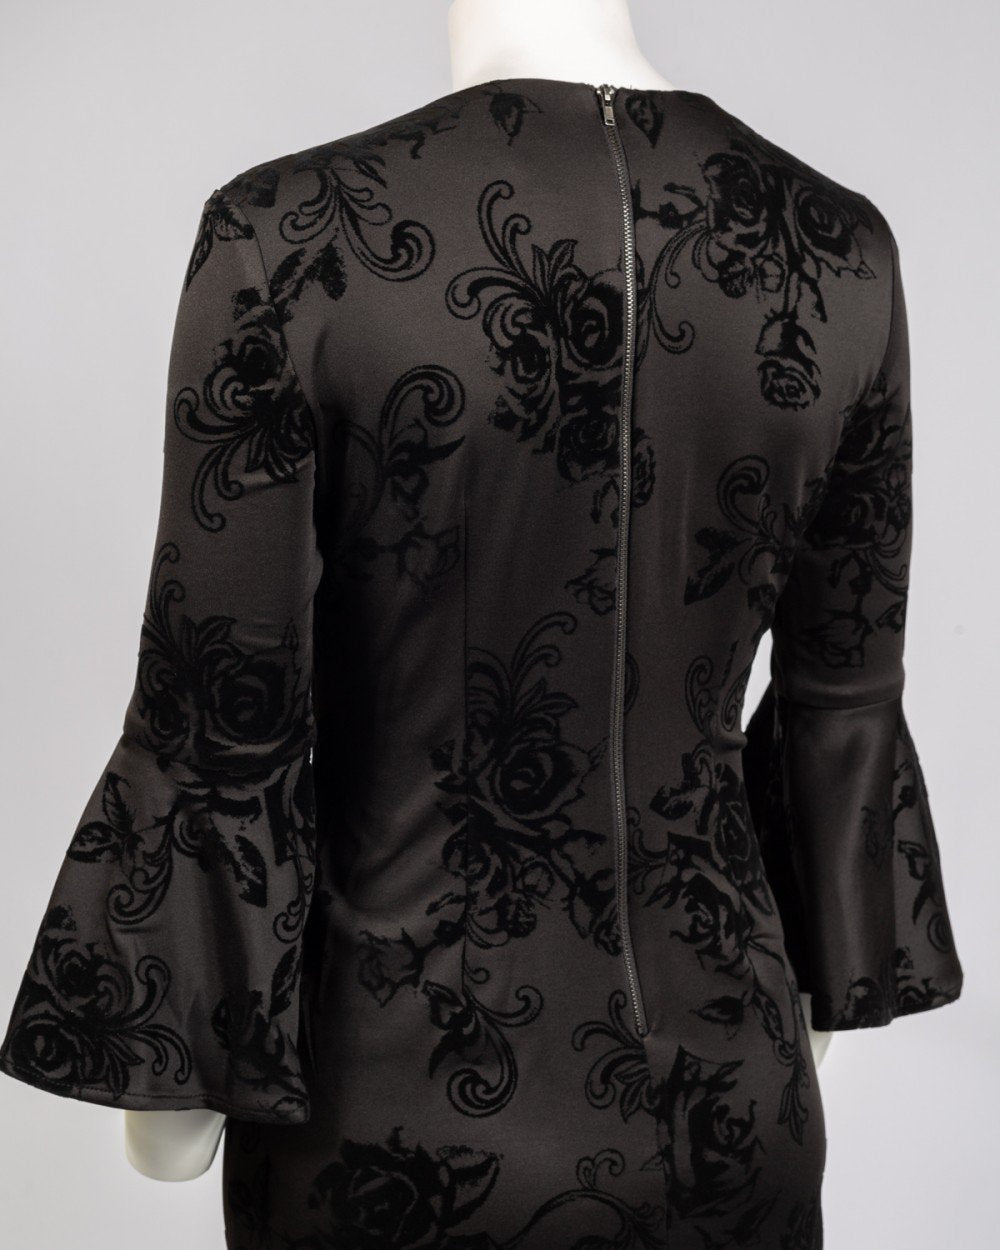 Gabby Skye - 18474M Floral Jacquard Bell Sleeve Seam Down Short Dress In Black